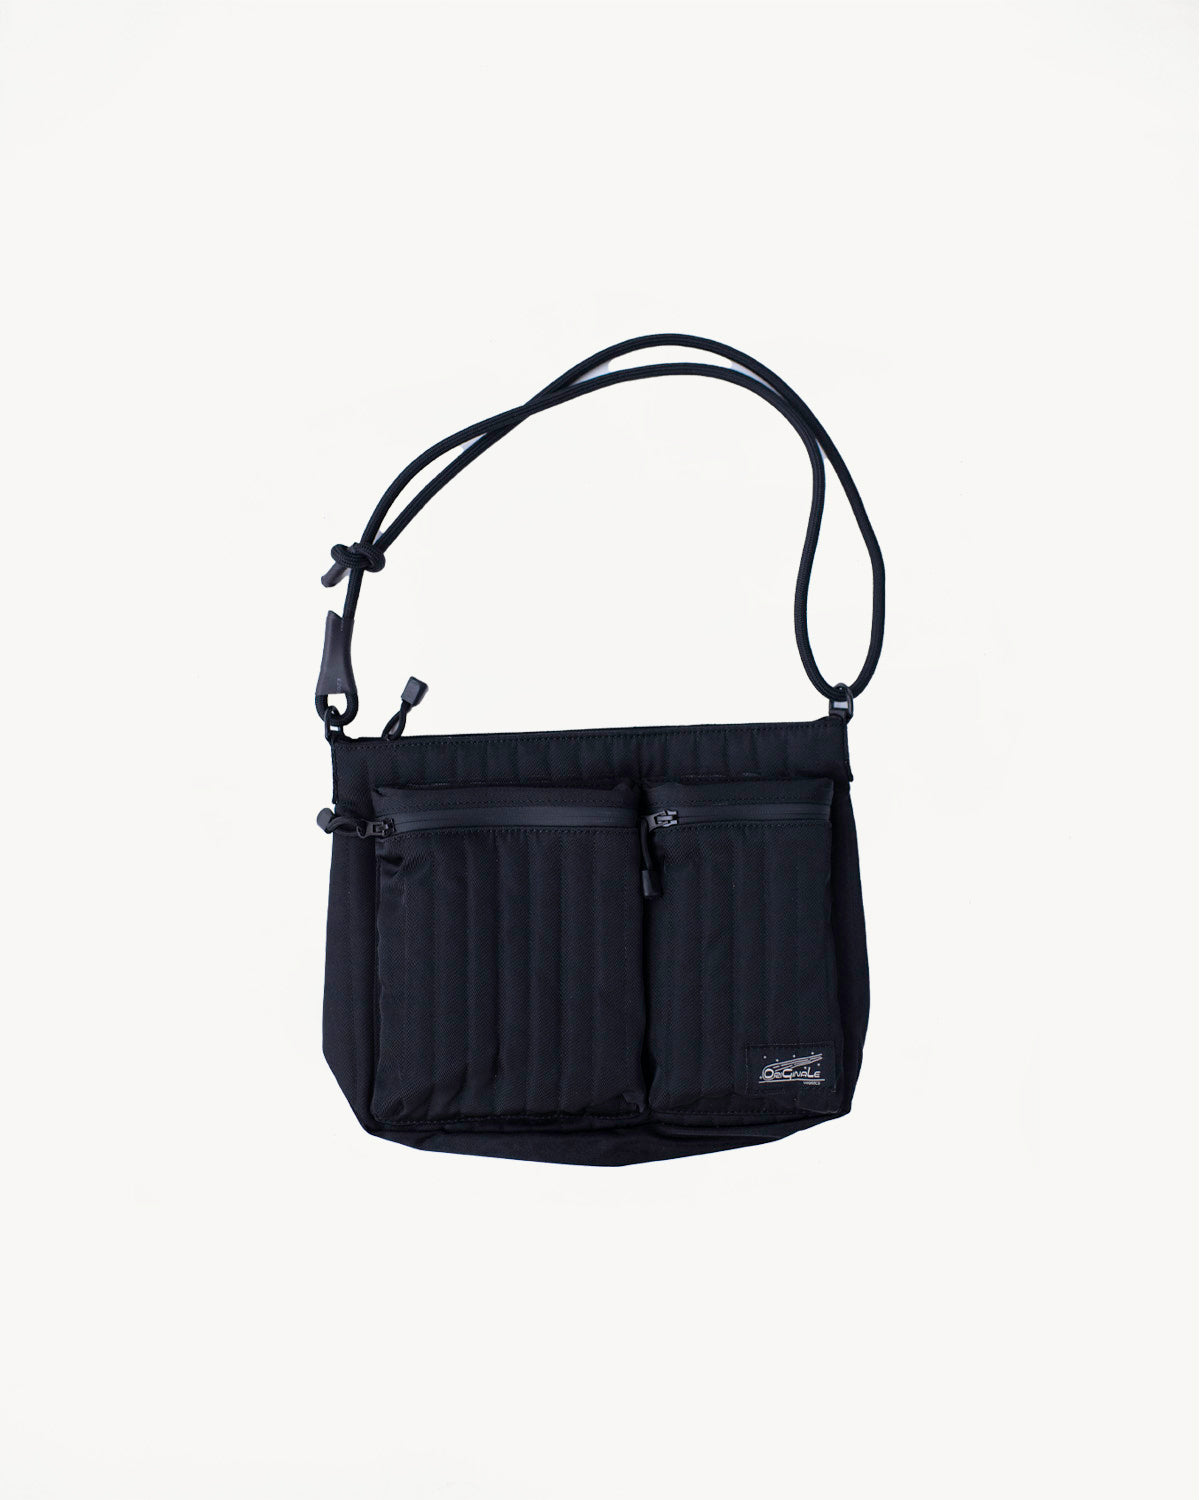 OGL-ORI-MILLIE-BLK - Originale Tech Material Millie Bag - Black